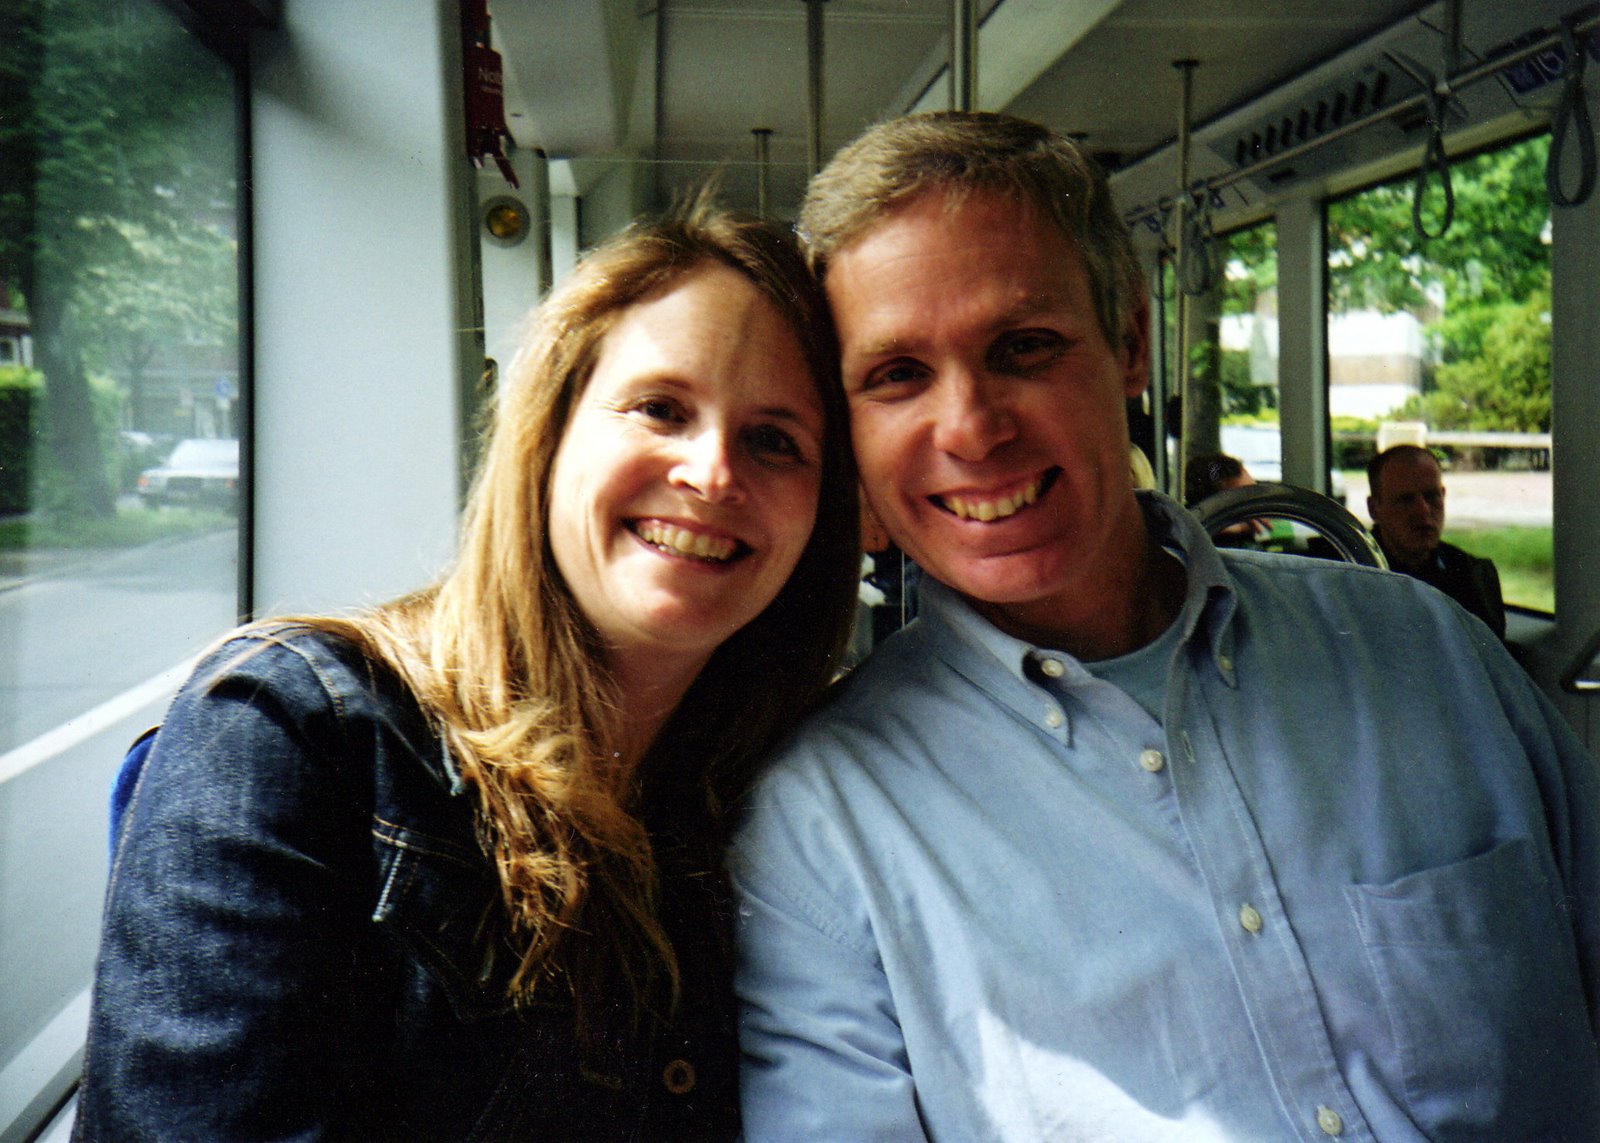 Mark and Karen Abercrombie